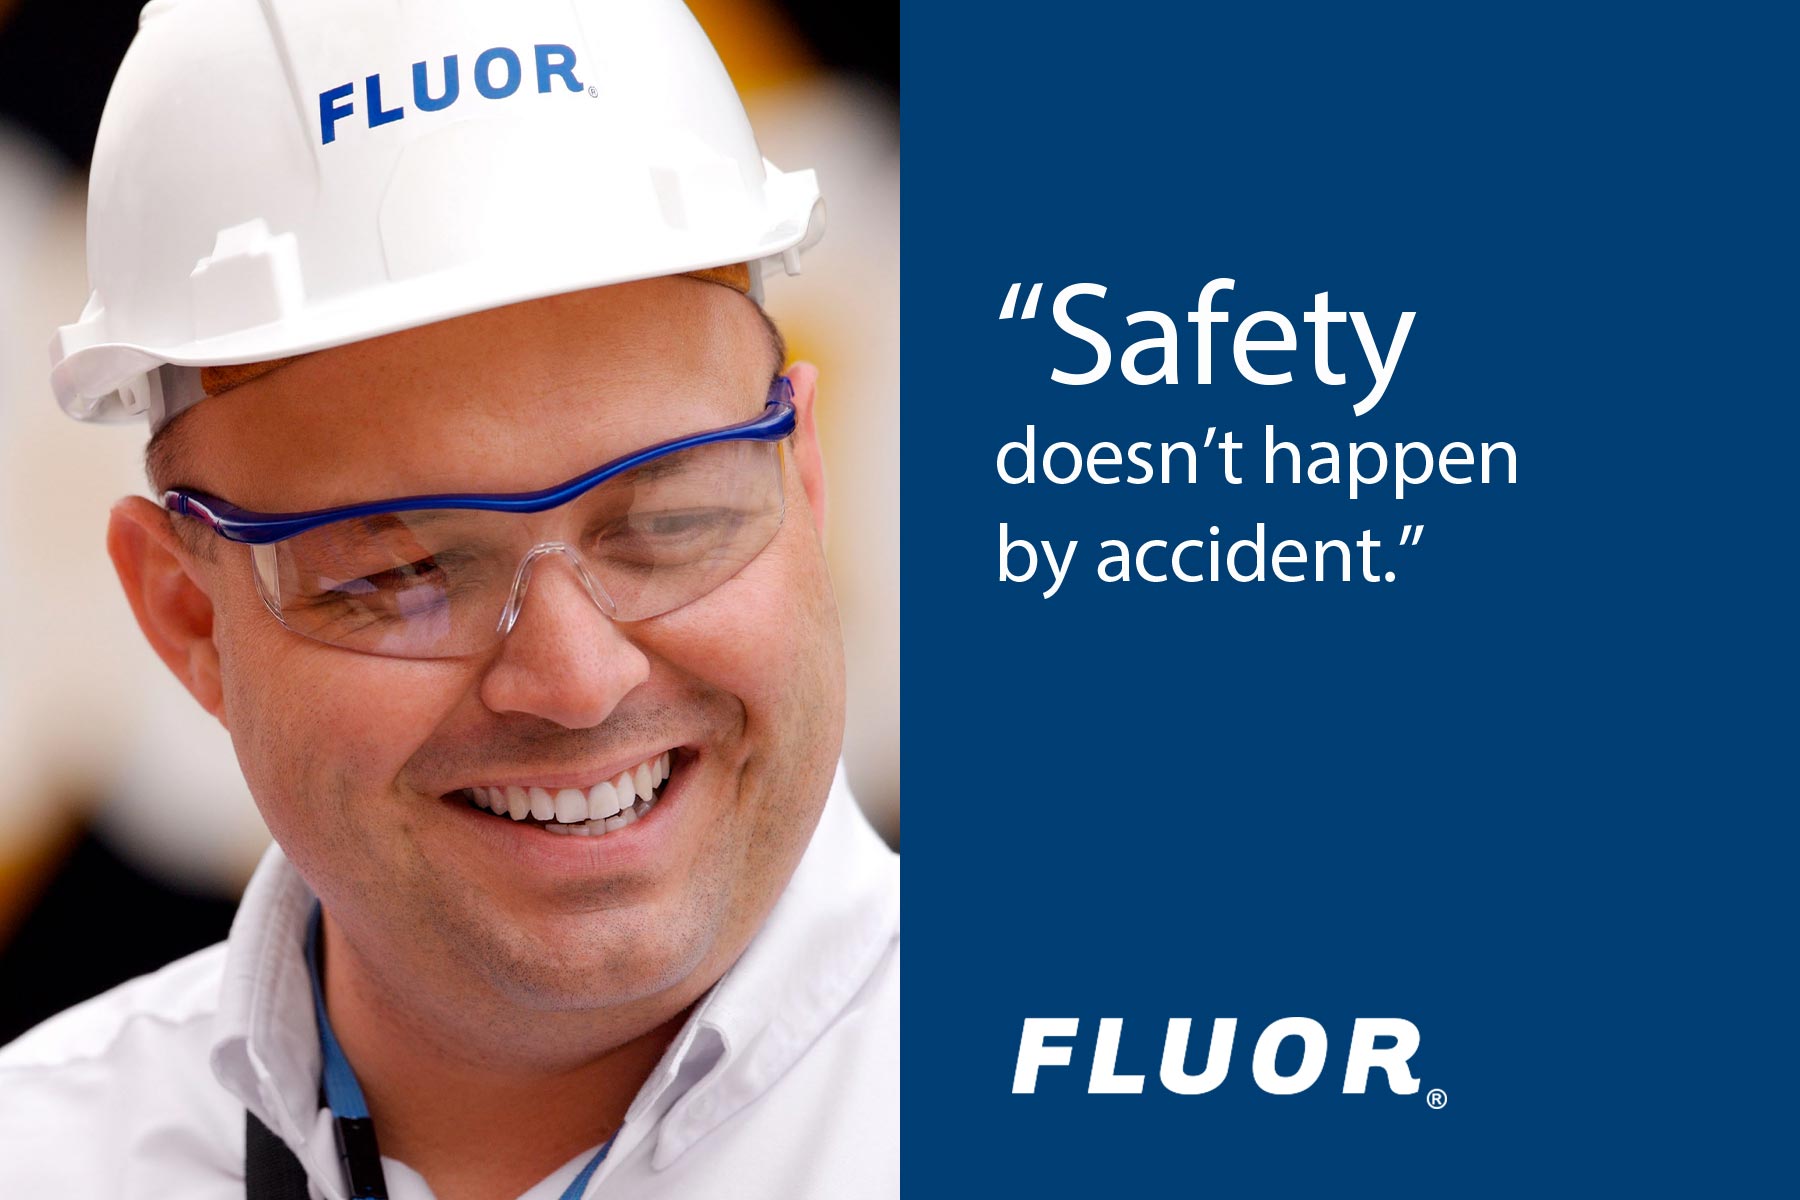 Fluor - Construction Company Logo on a Safety Ad